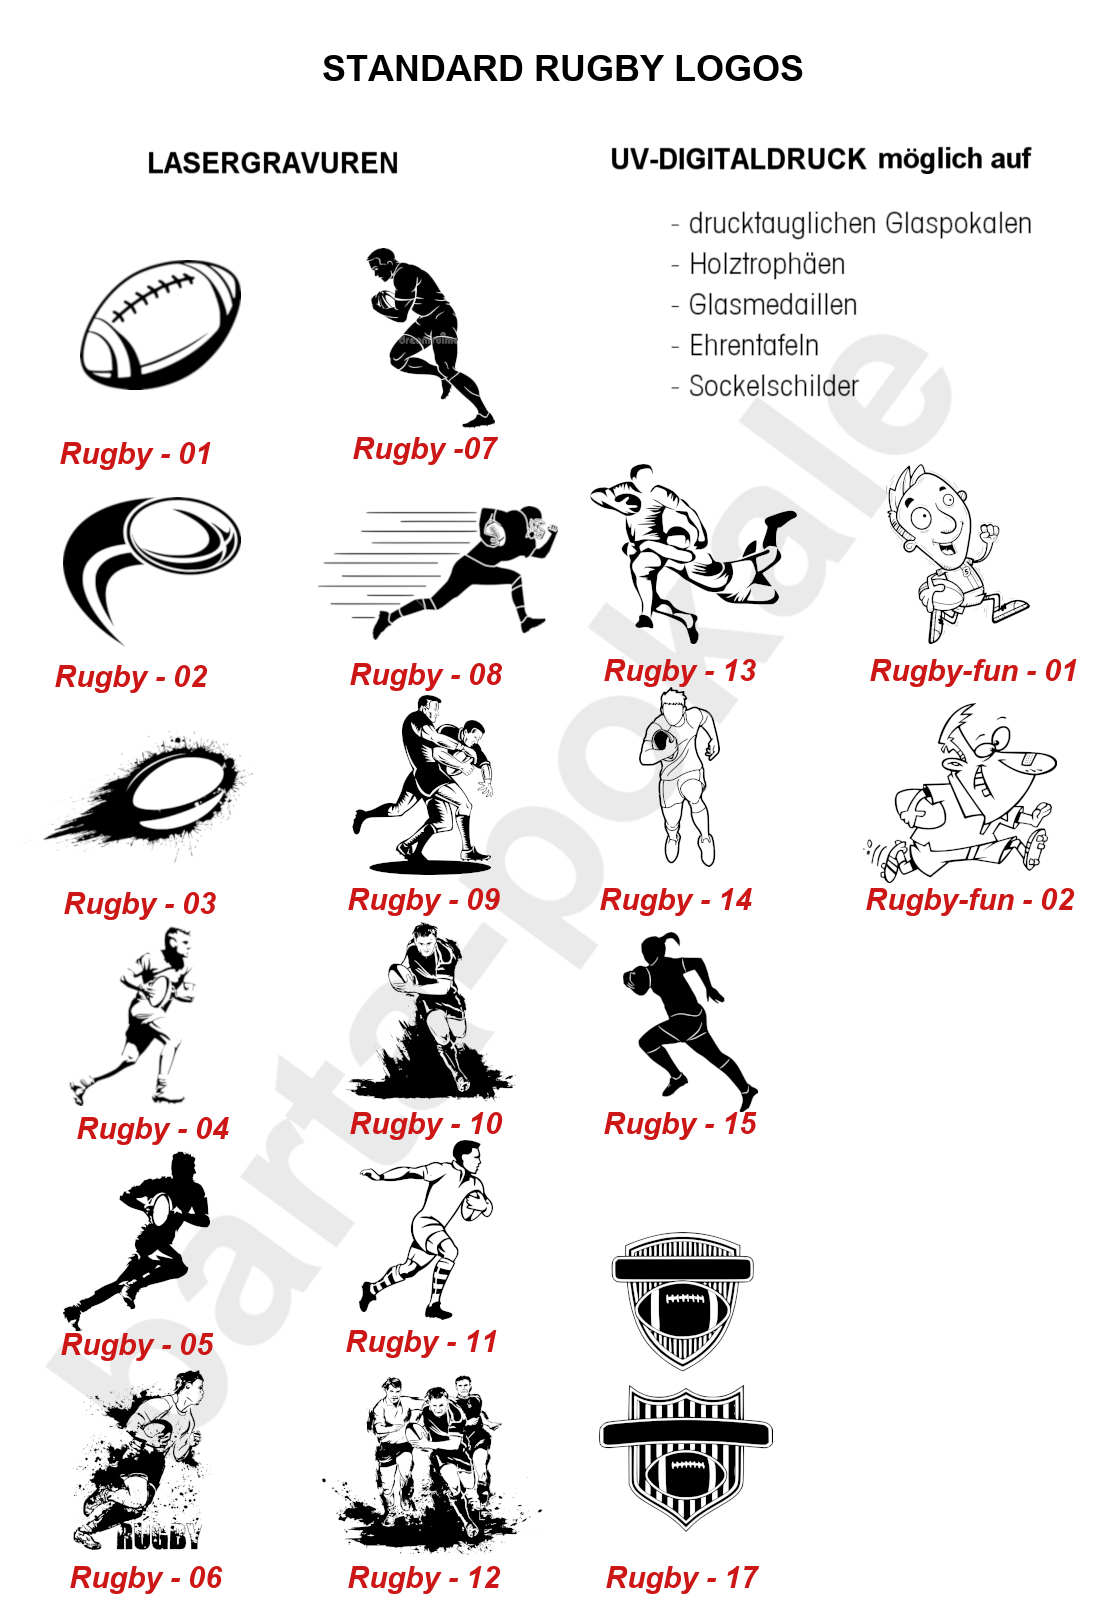 Standard Logos Rugby